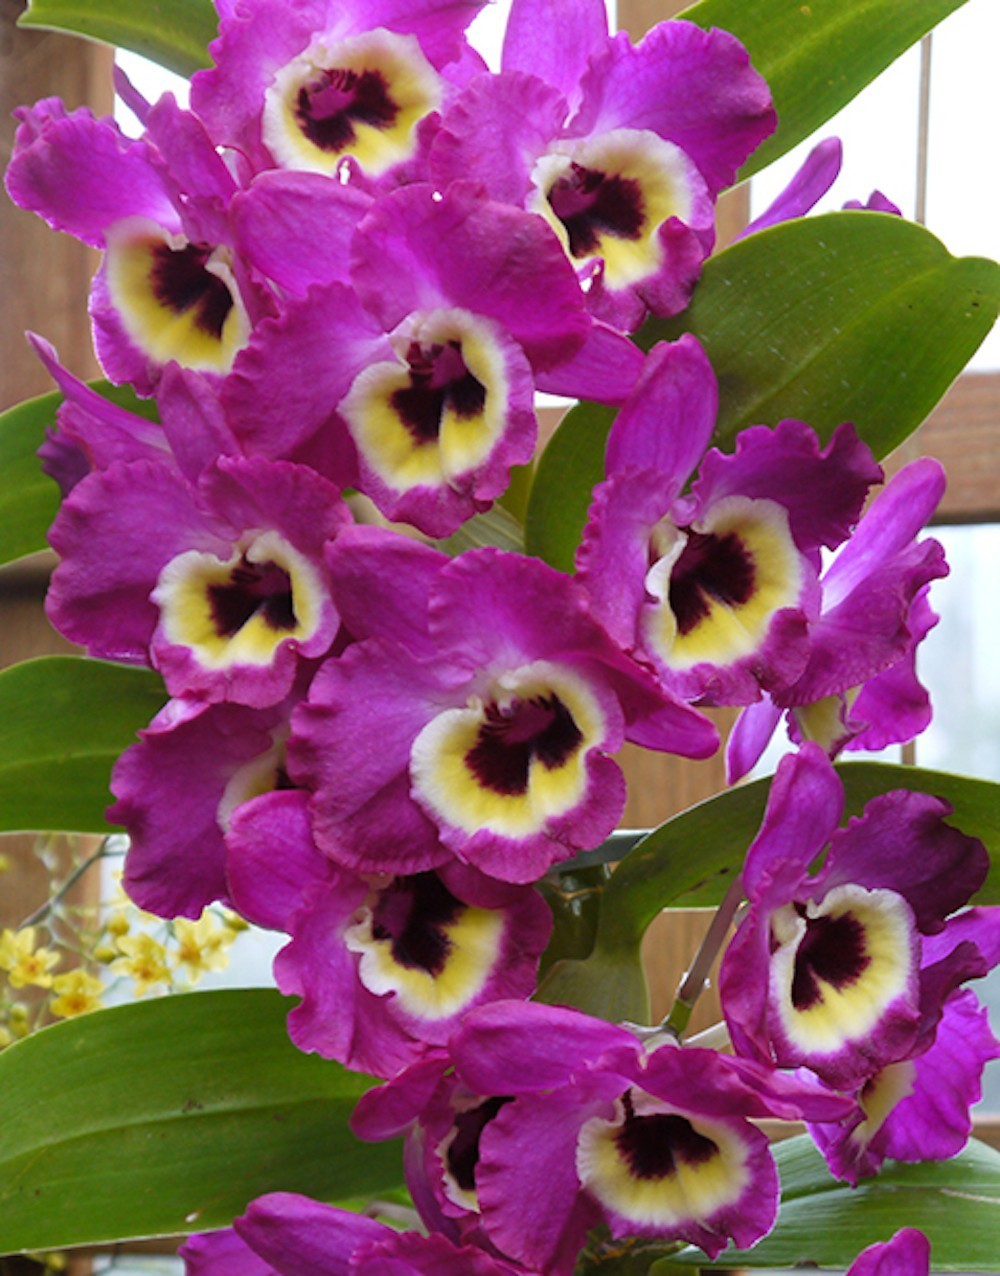 Cumpara online Orhidee Dendrobium mov cu cel mai bun pret, livrare rapida!